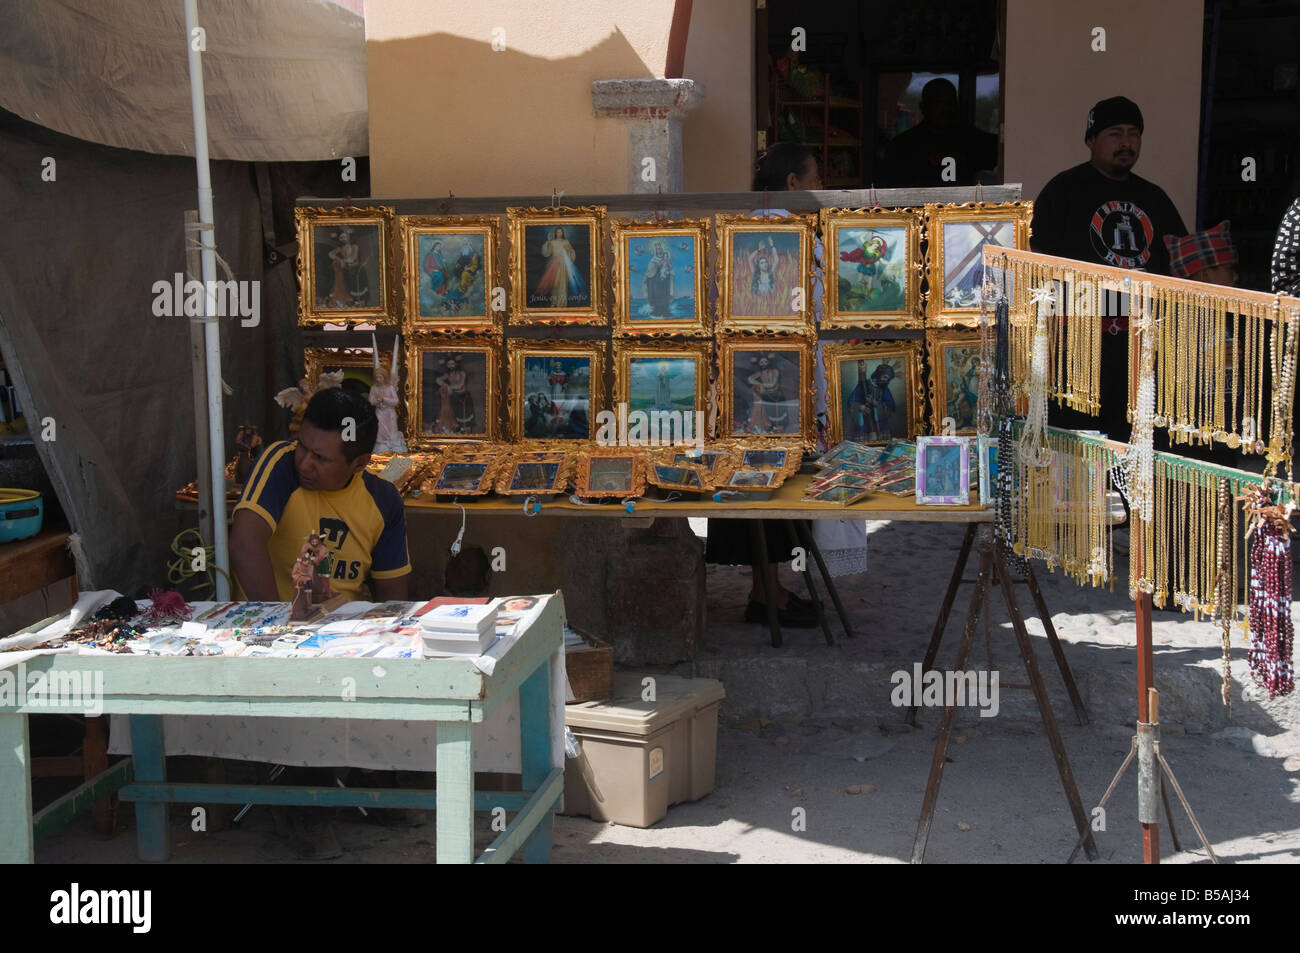 Stalls selling religious souvenirs and artifacts, Santuario de Atotonilco, Guanajuato State, Mexico Stock Photo